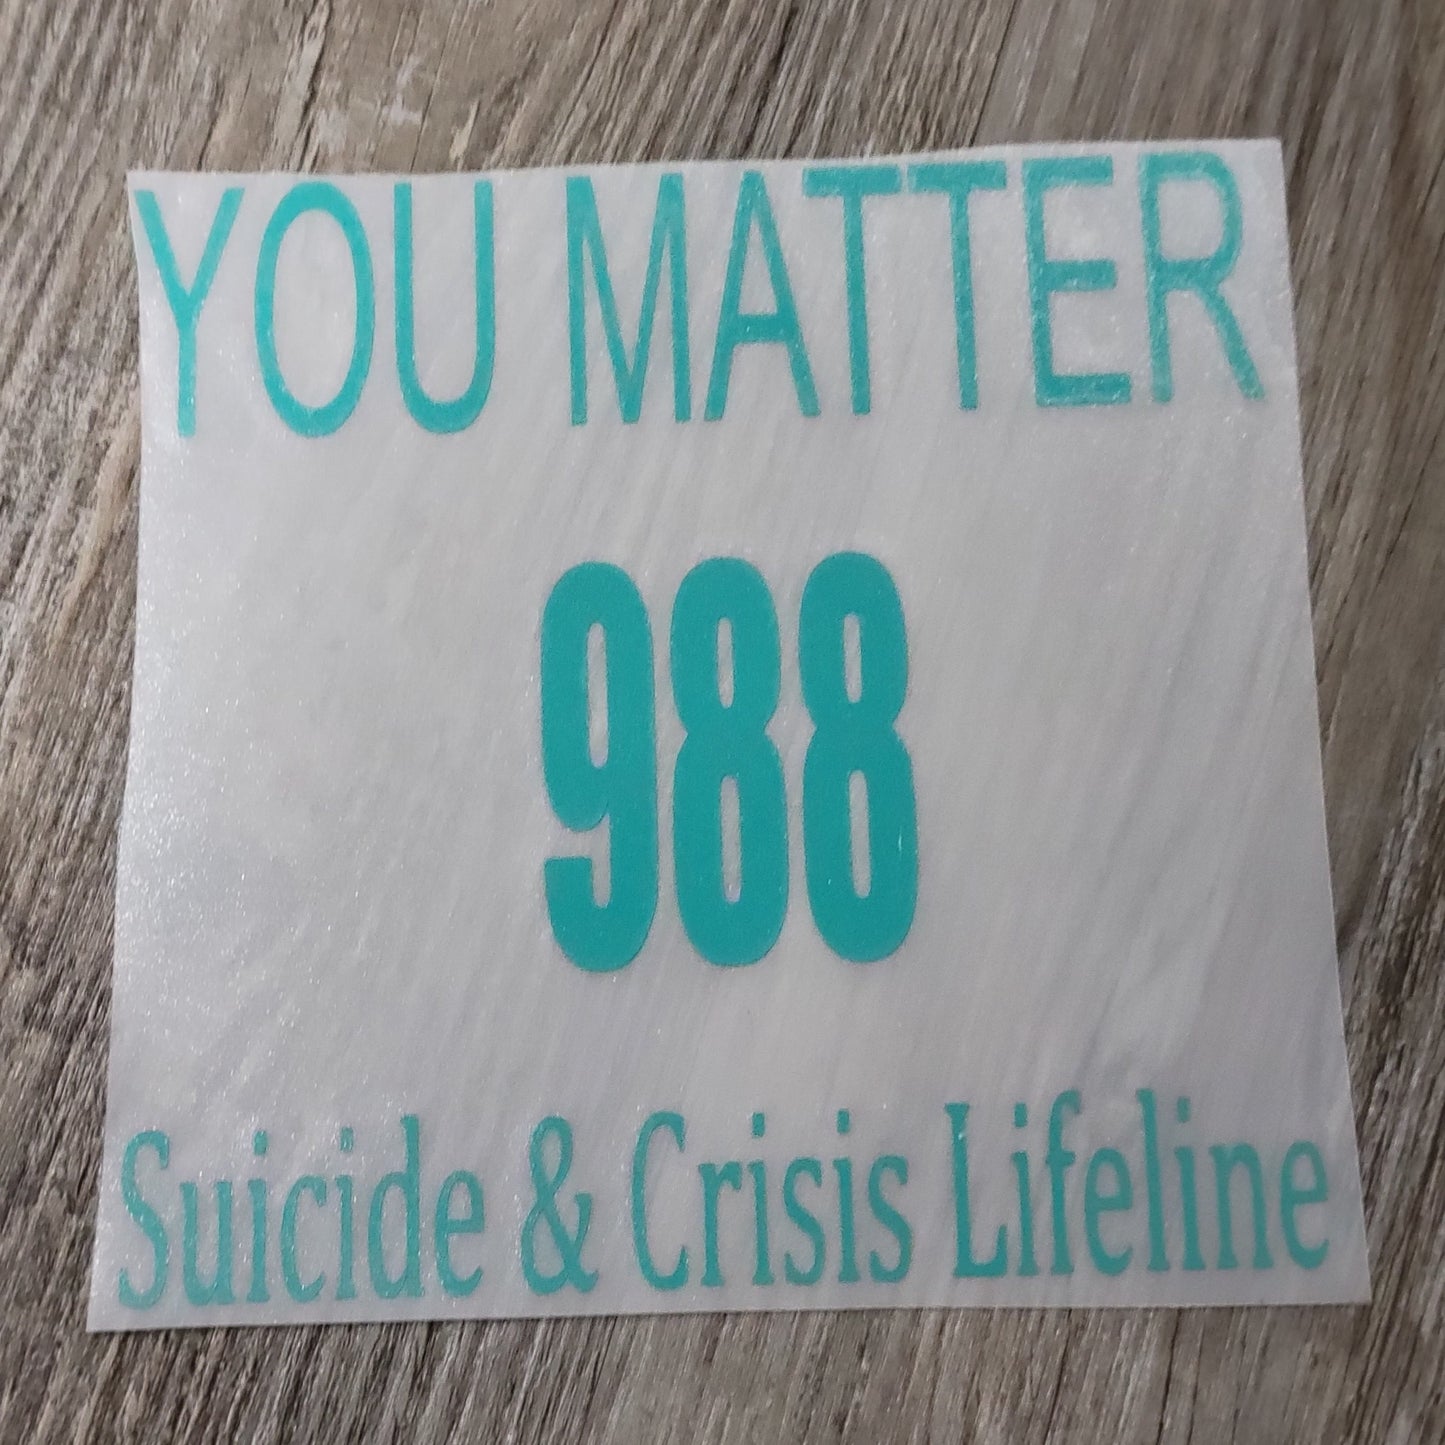 You Matter 988 Suicide & Crisis Lifeline decal